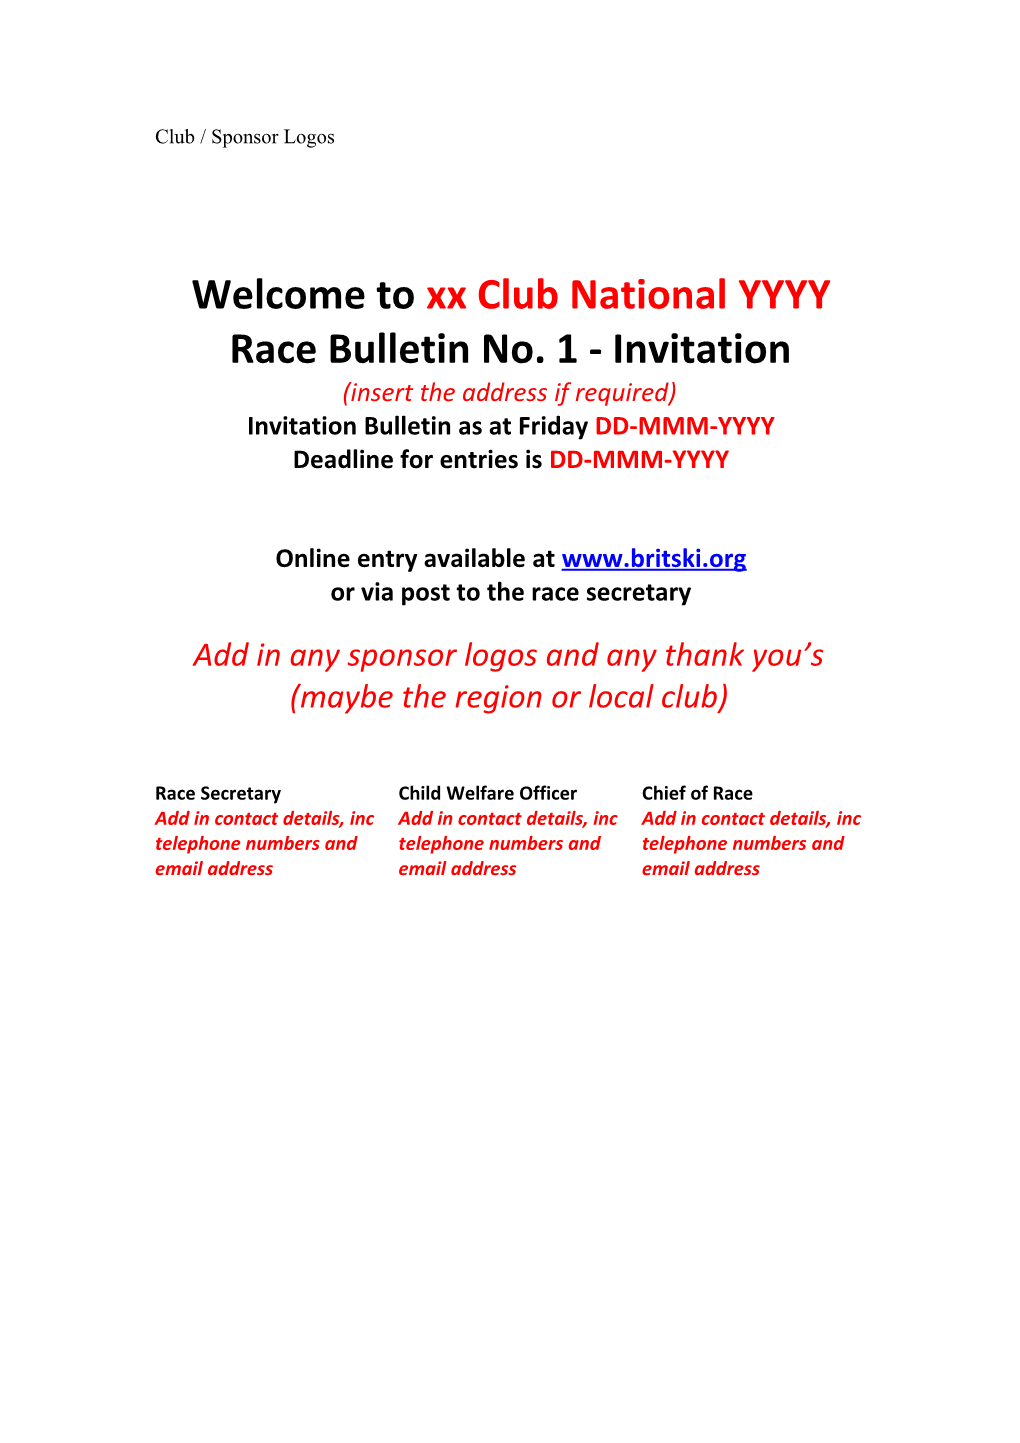 Welcome to Xx Club Nationalyyyy